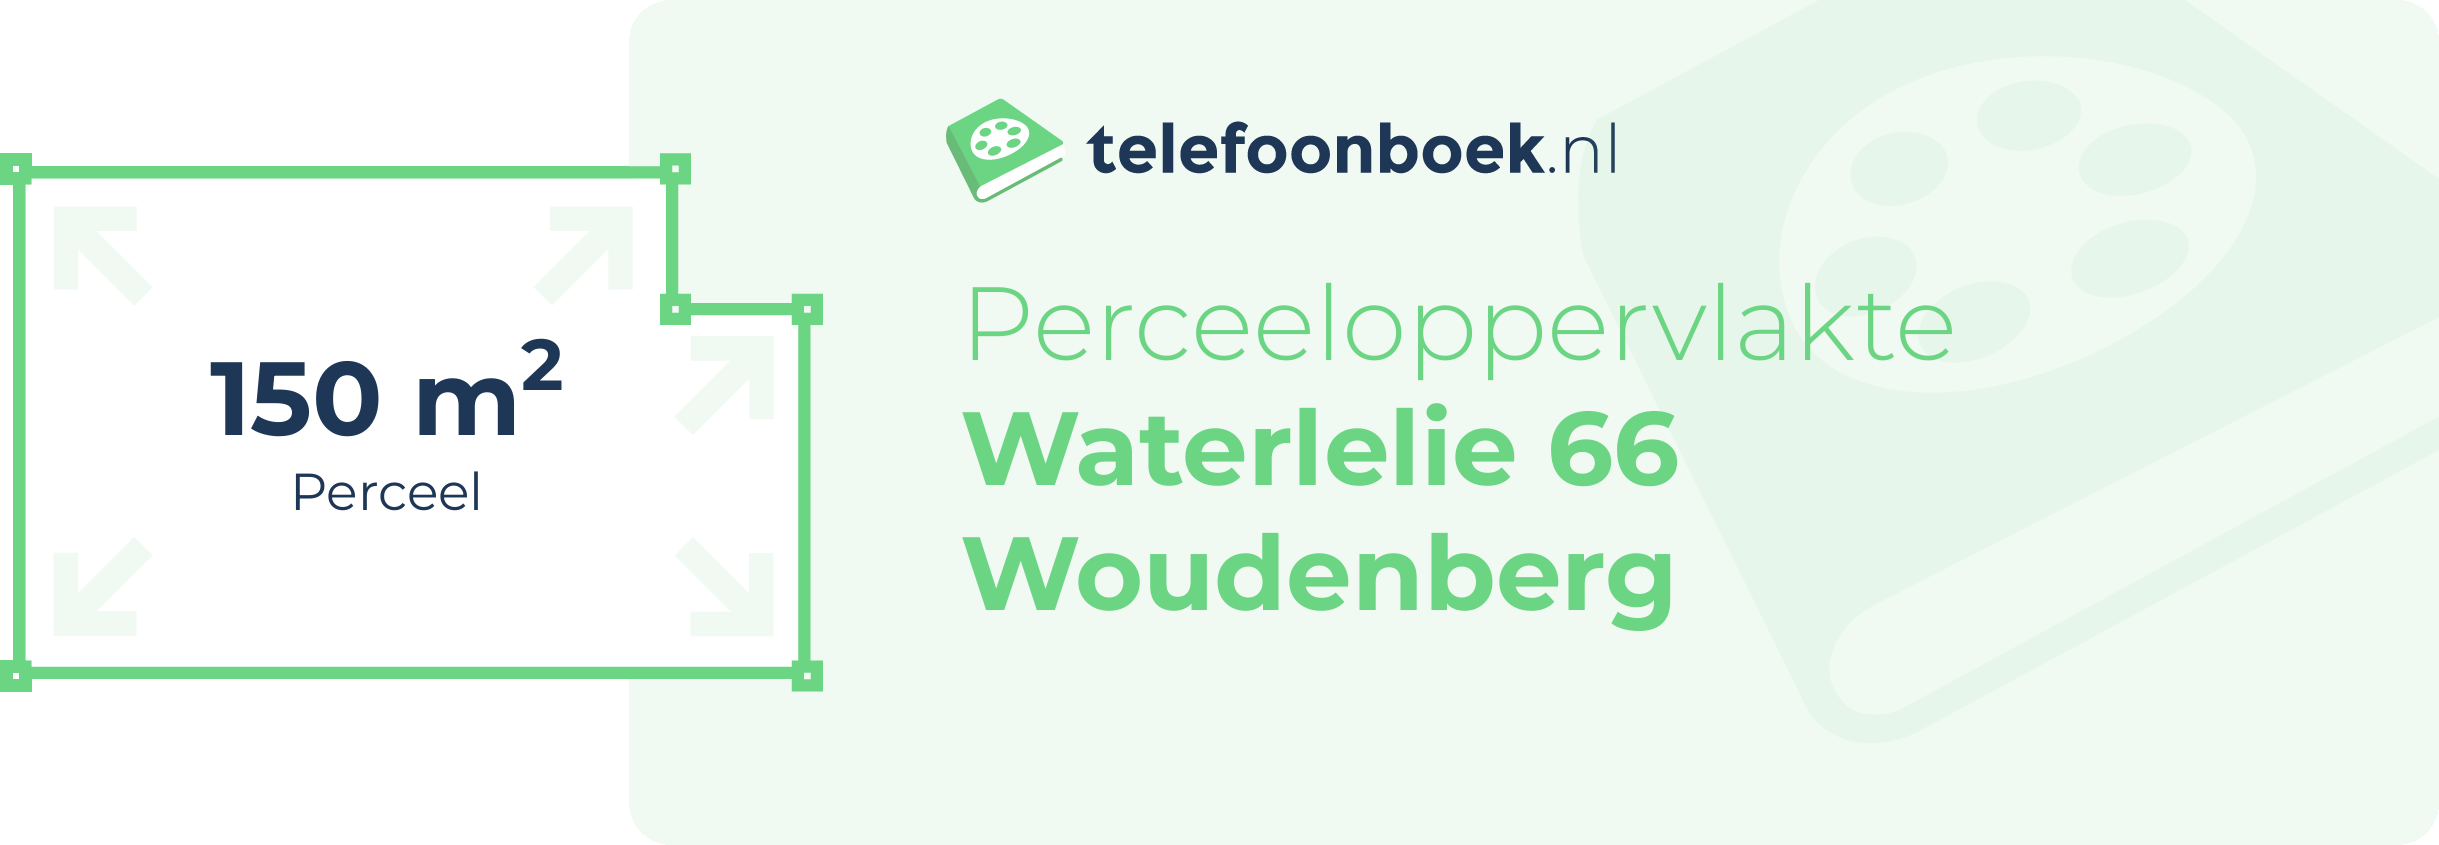 Perceeloppervlakte Waterlelie 66 Woudenberg